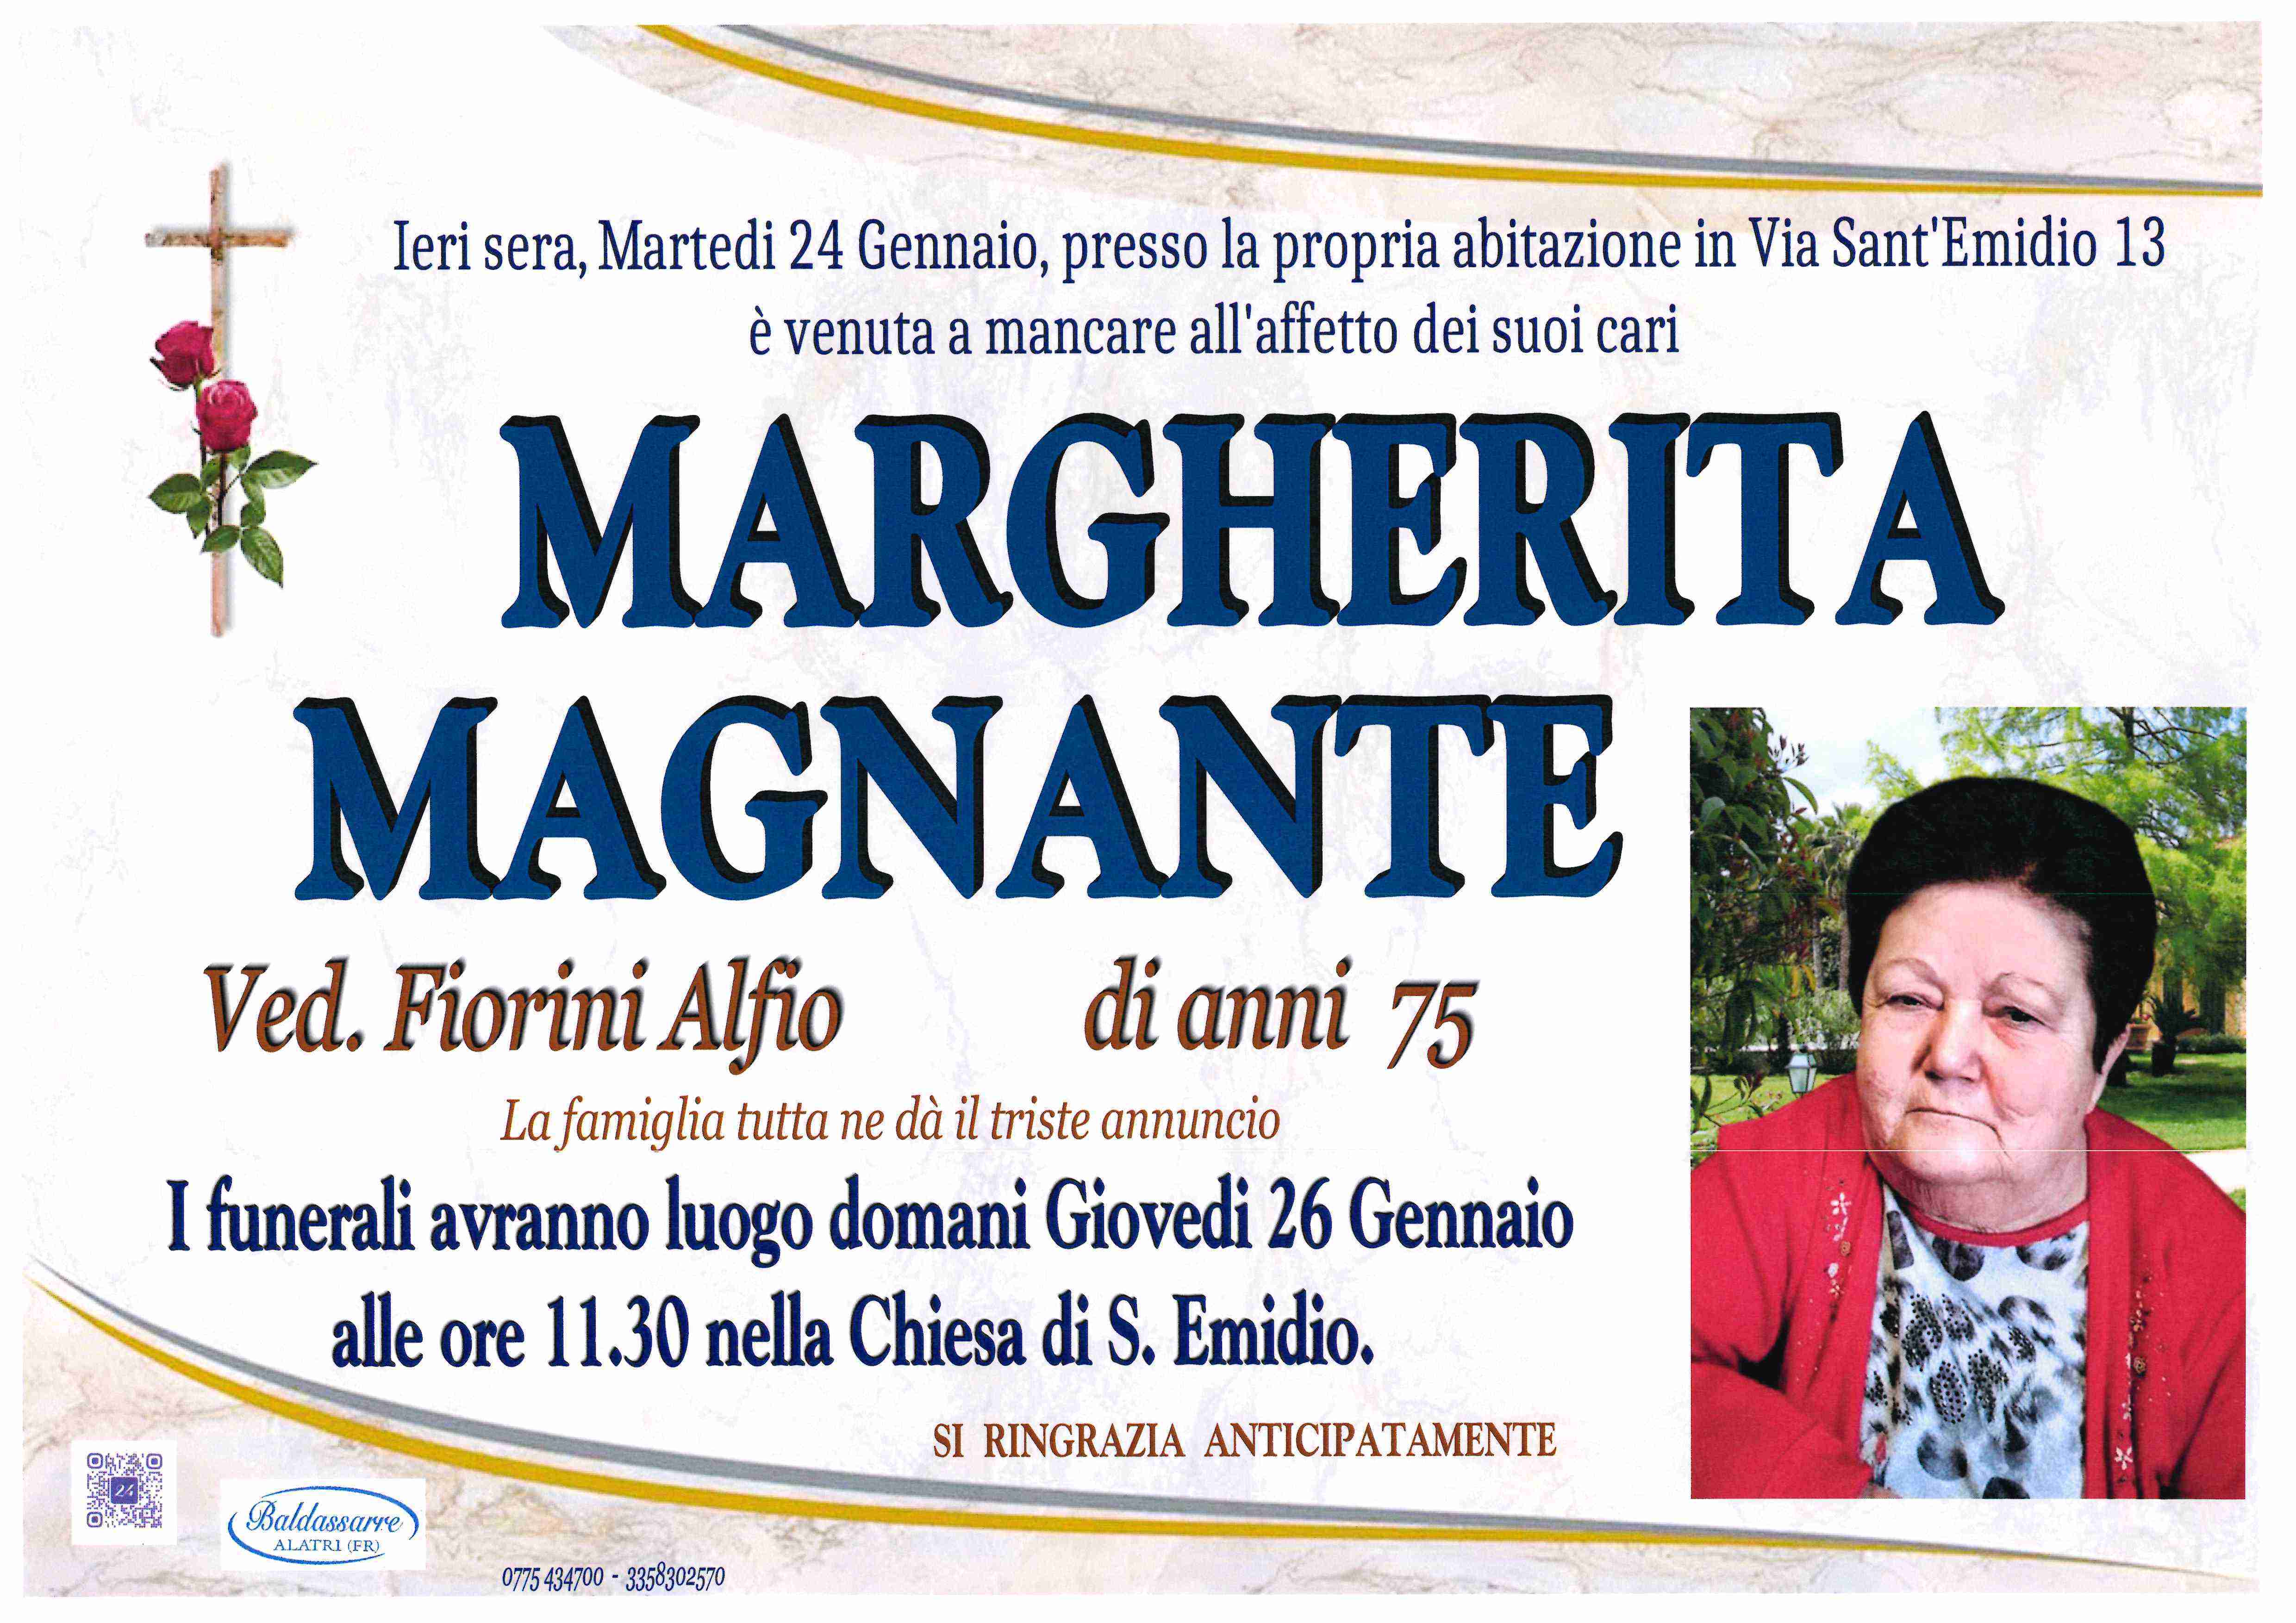 Margherita Magnante